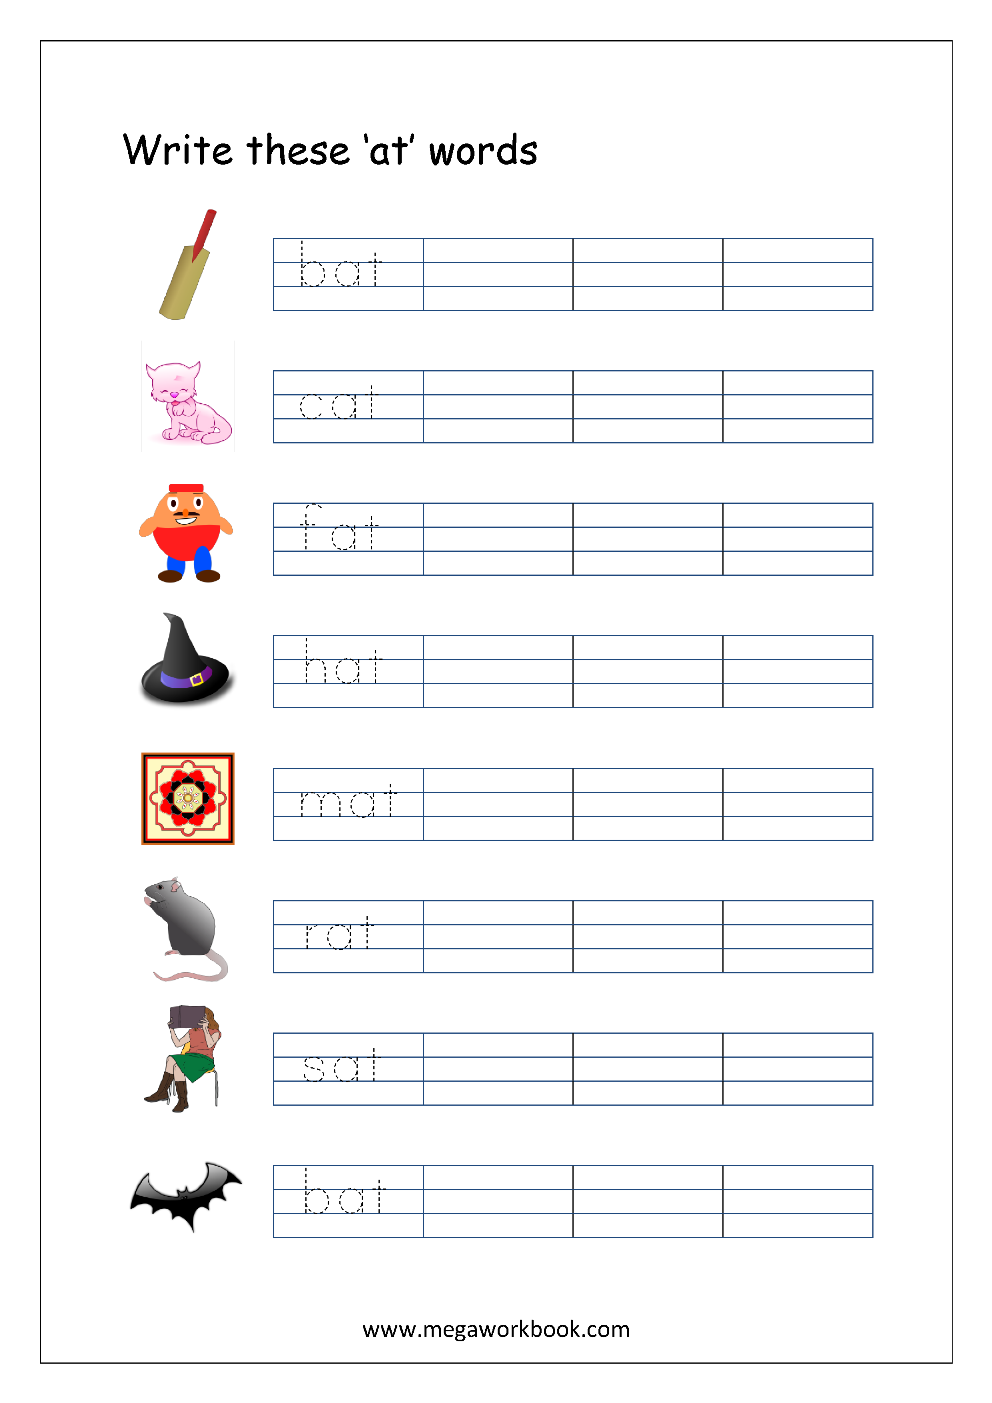 free-printable-worksheets-for-preschool-and-kindergarten-megaworkbook